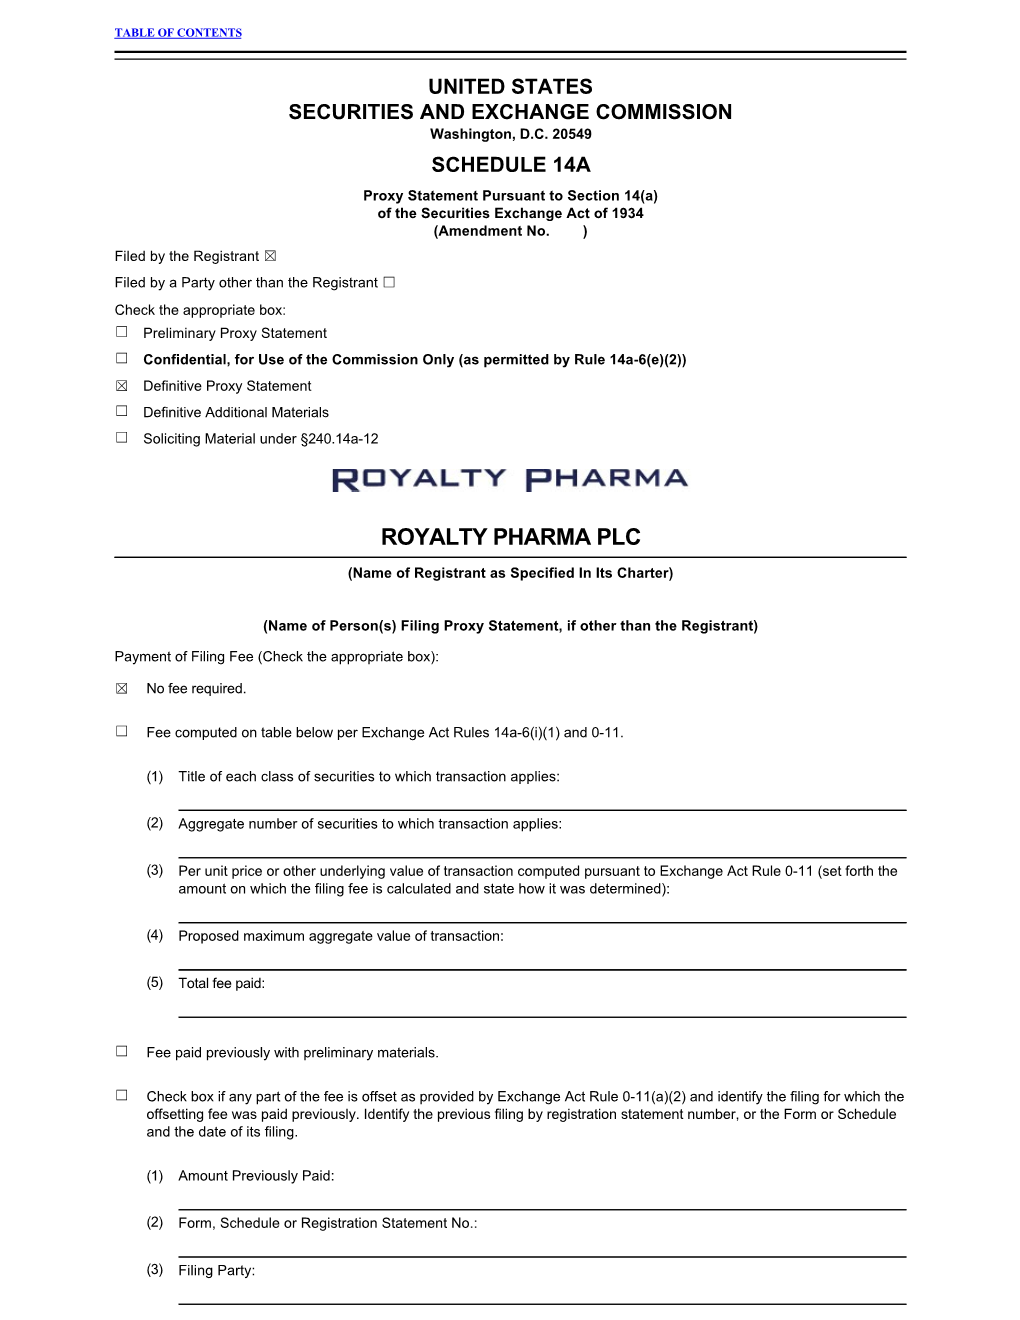 Royalty Pharma Proxy Statement